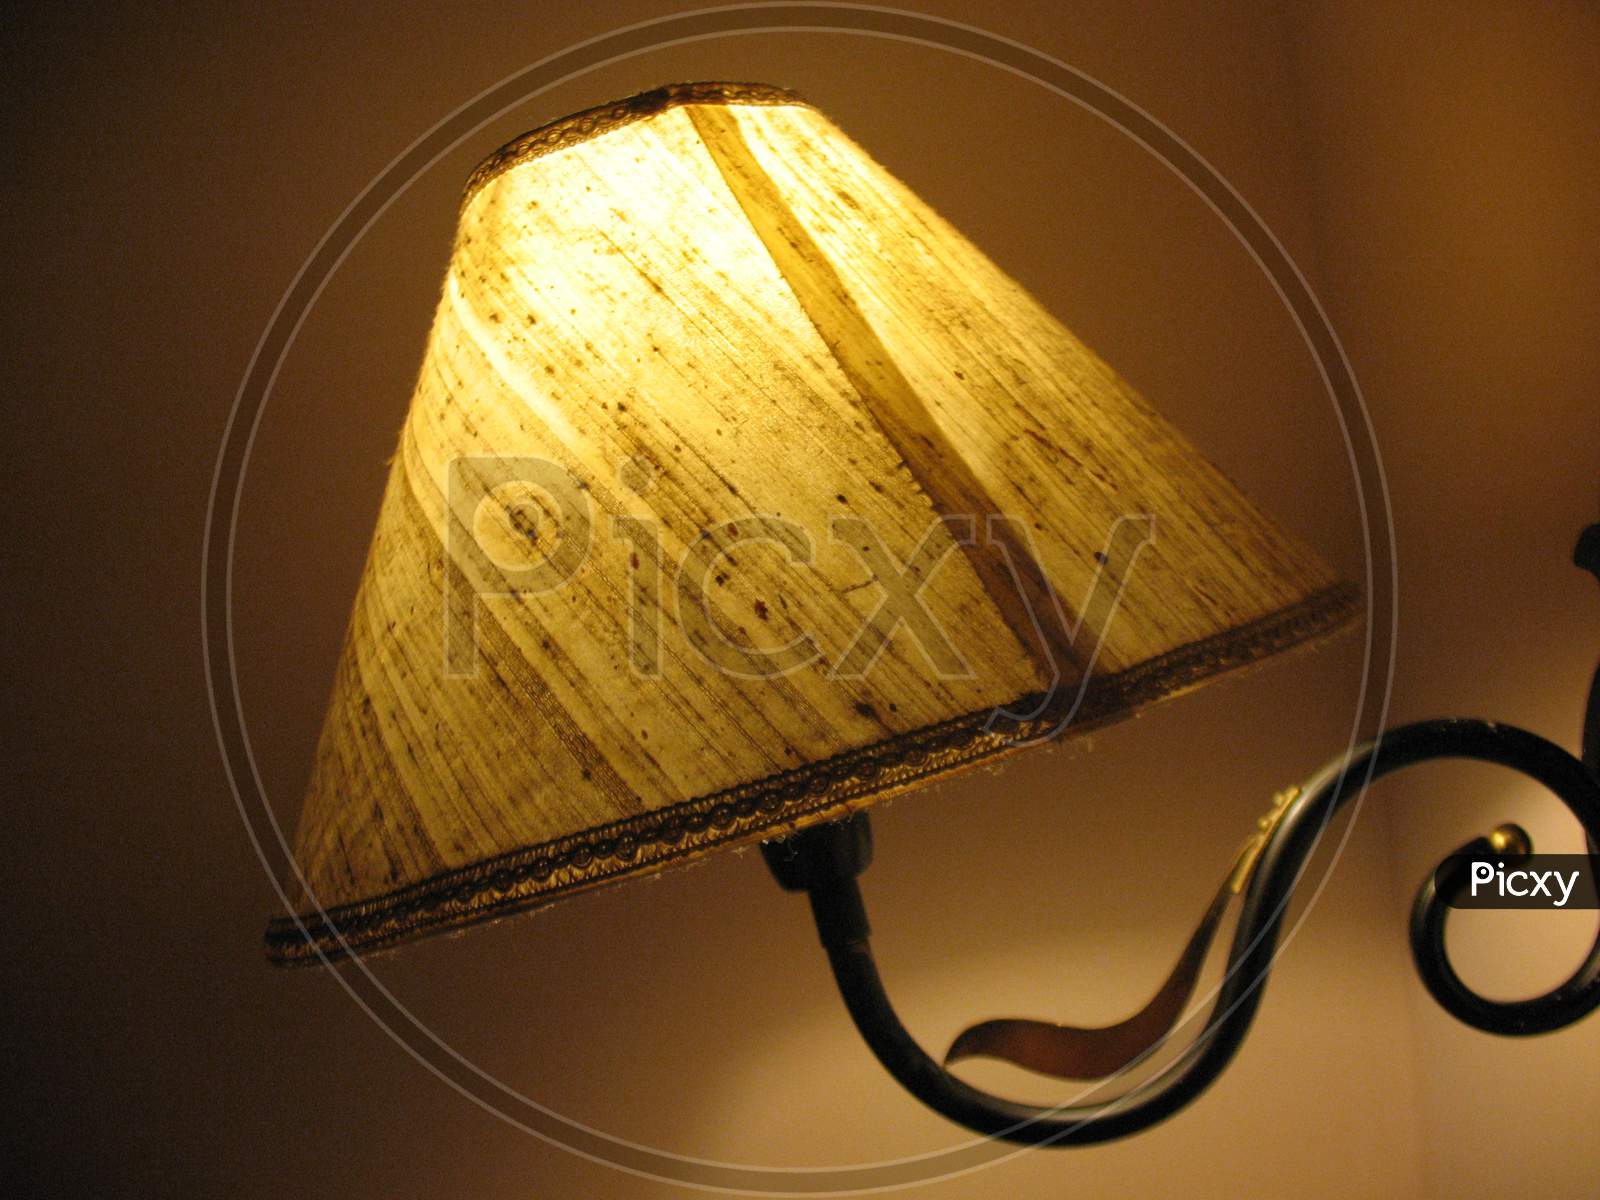 night lamp